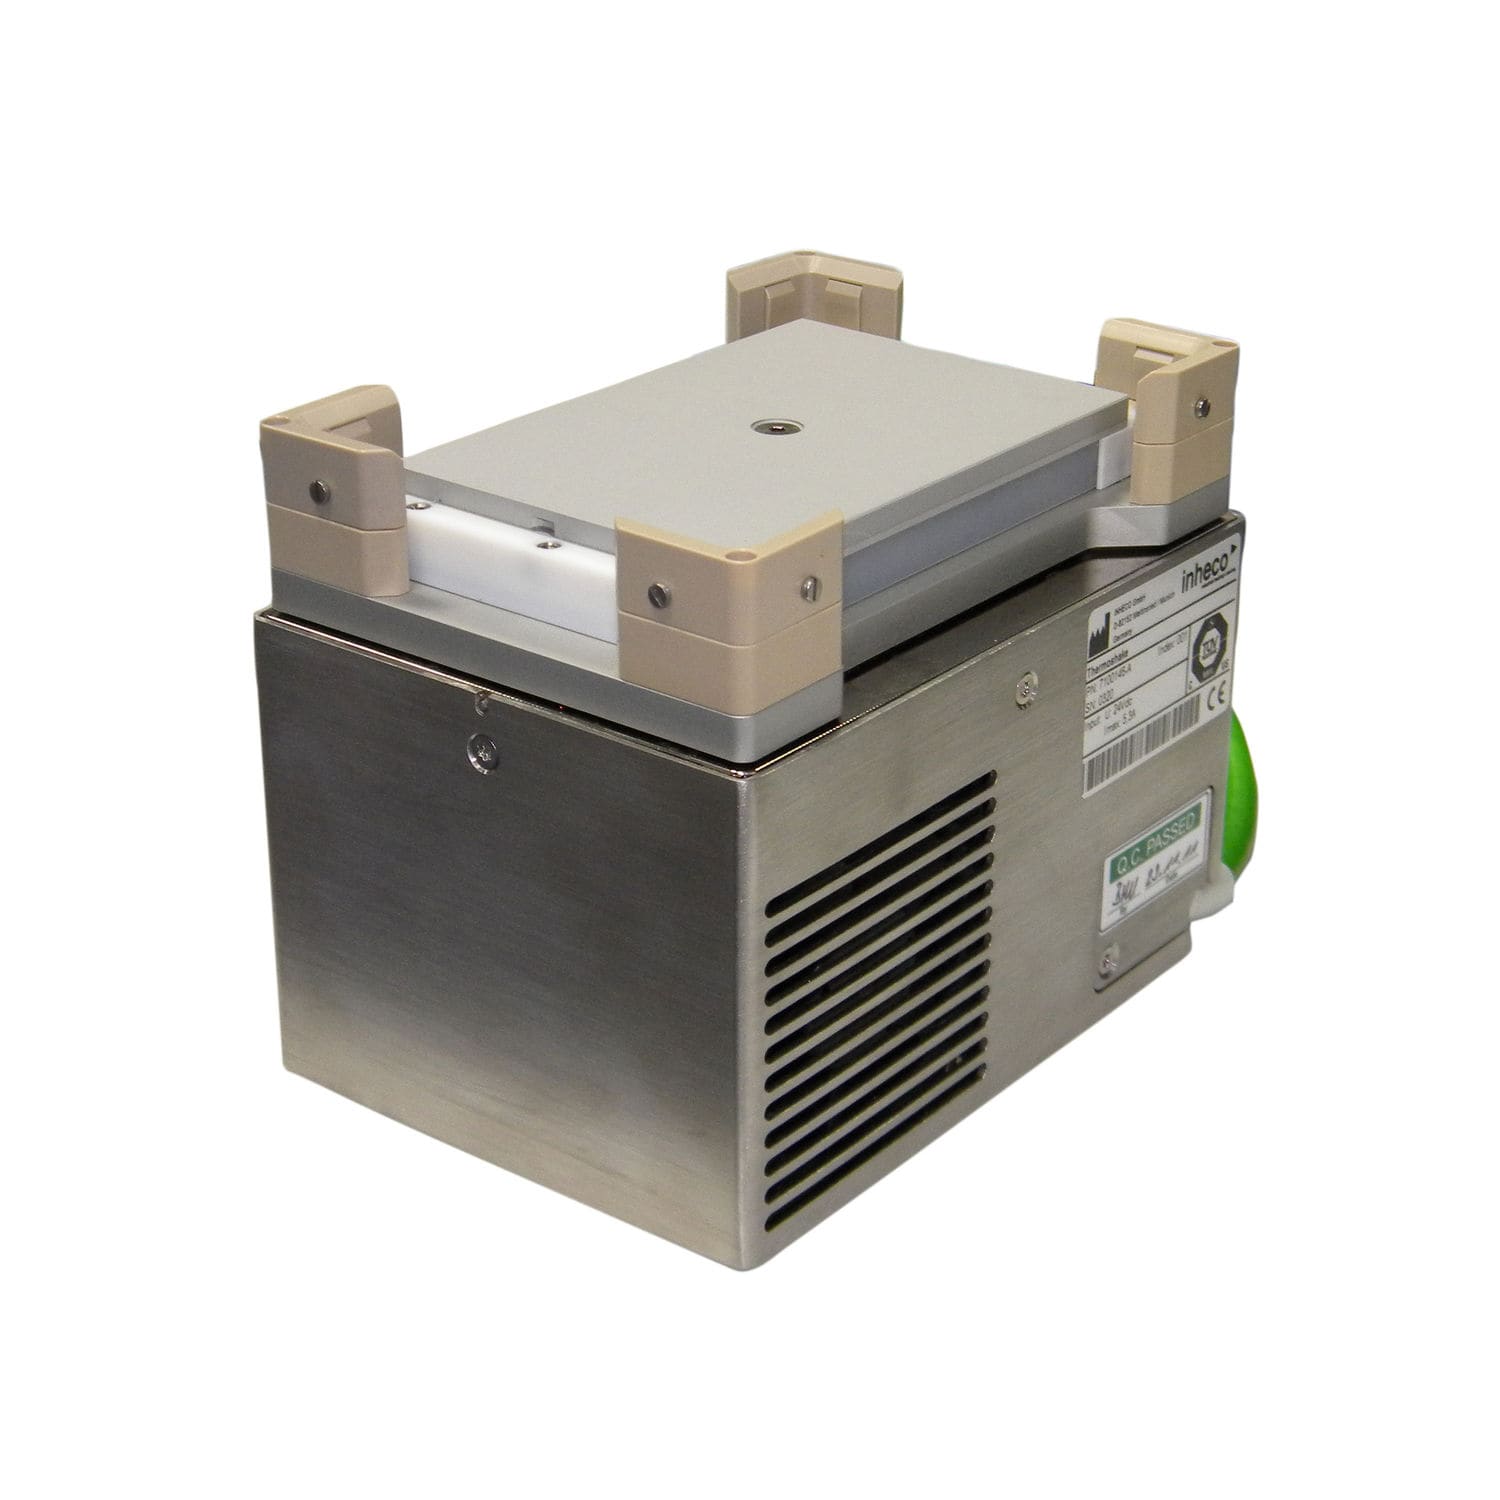 Inheco CPAC加热制冷器-高性能珀尔贴驱动温控模块